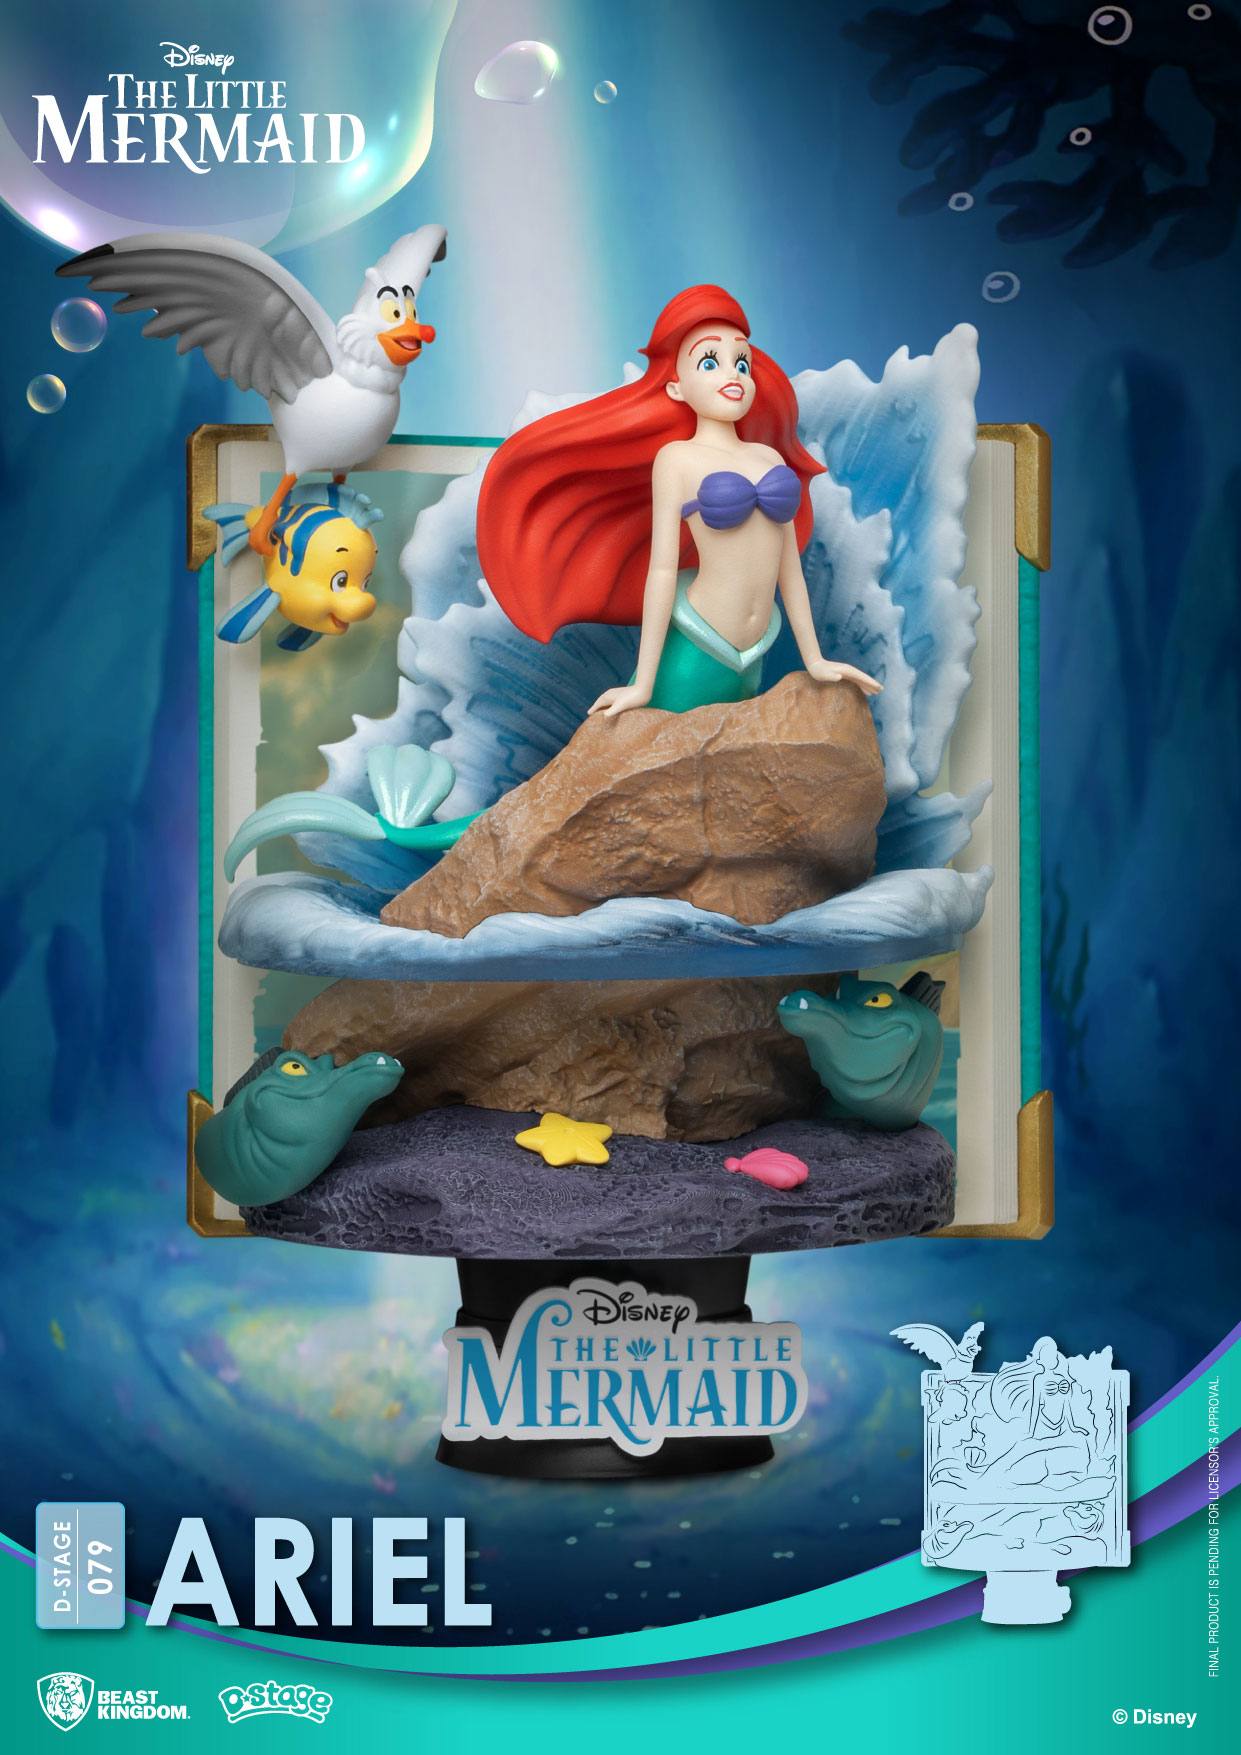 Diorama d-stage történetkönyv-sorozat Ariel